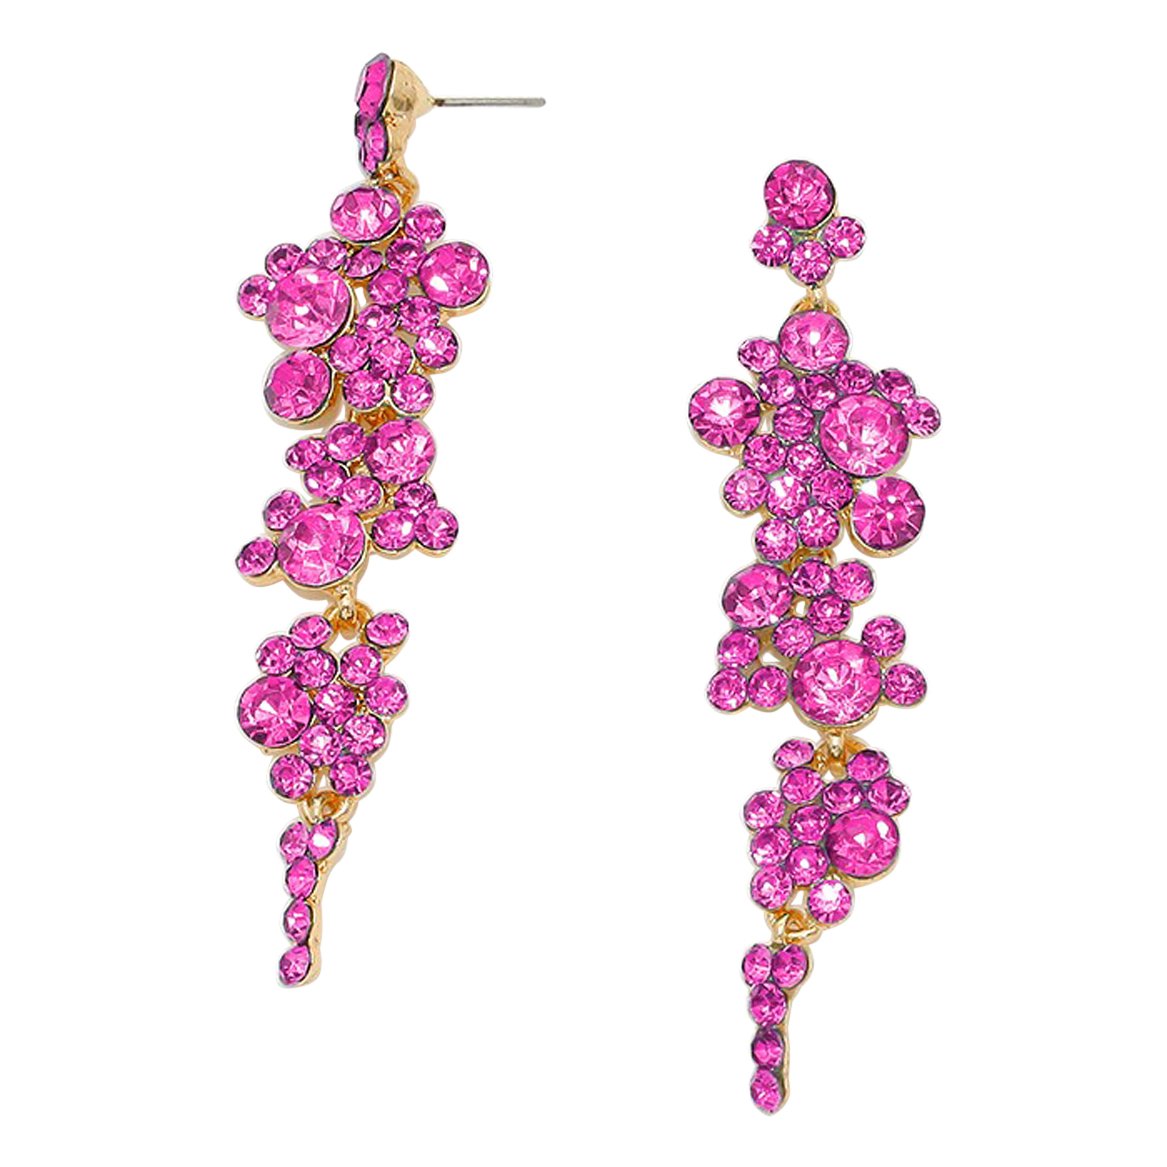 Buy Hot Pink Long Tassel Drop Earrings Online in India - Etsy